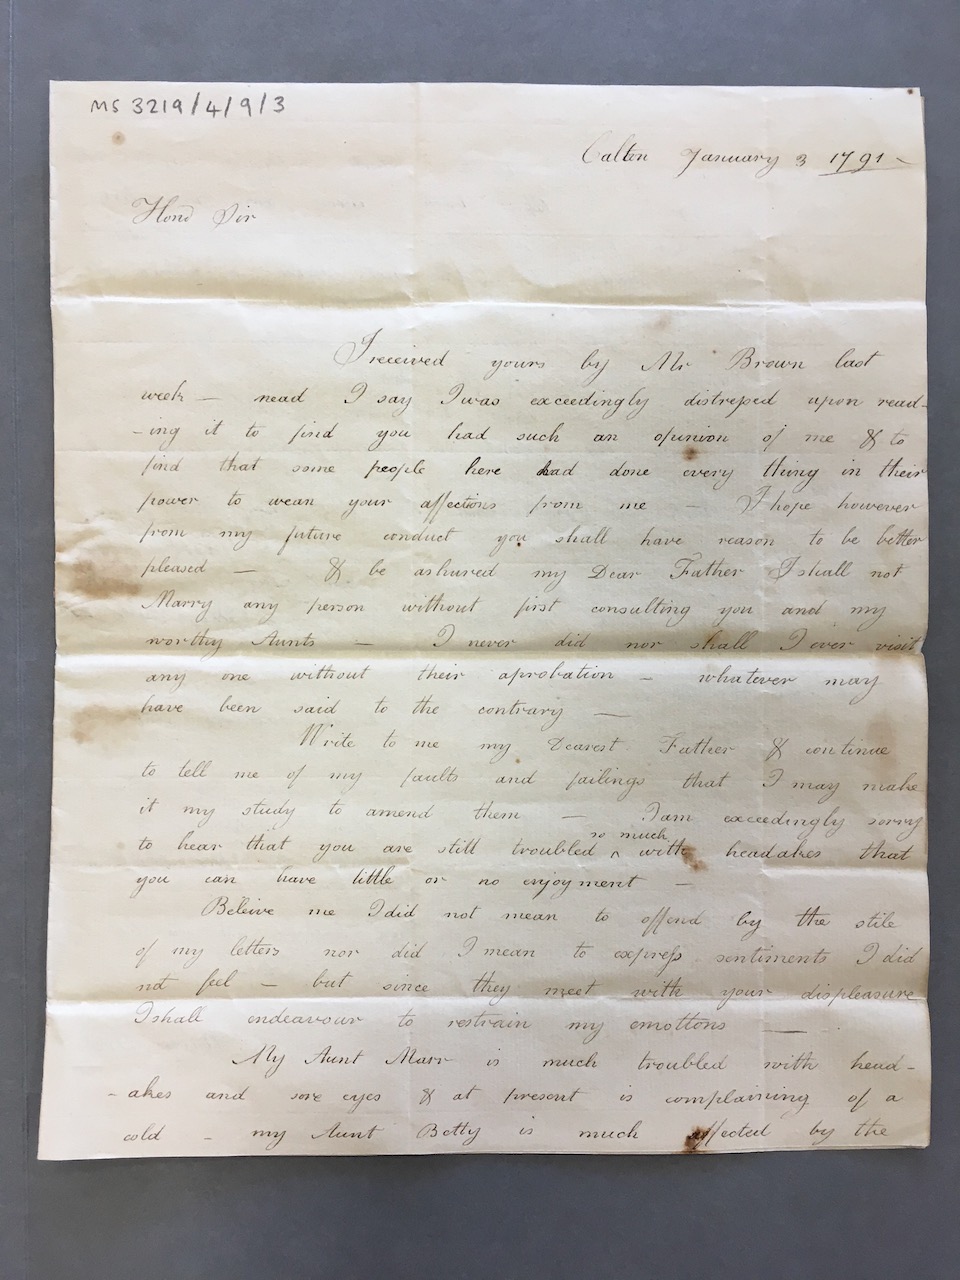 Image #1 of letter: Margaret Watt (II) to James Watt (II), 3 January 1791